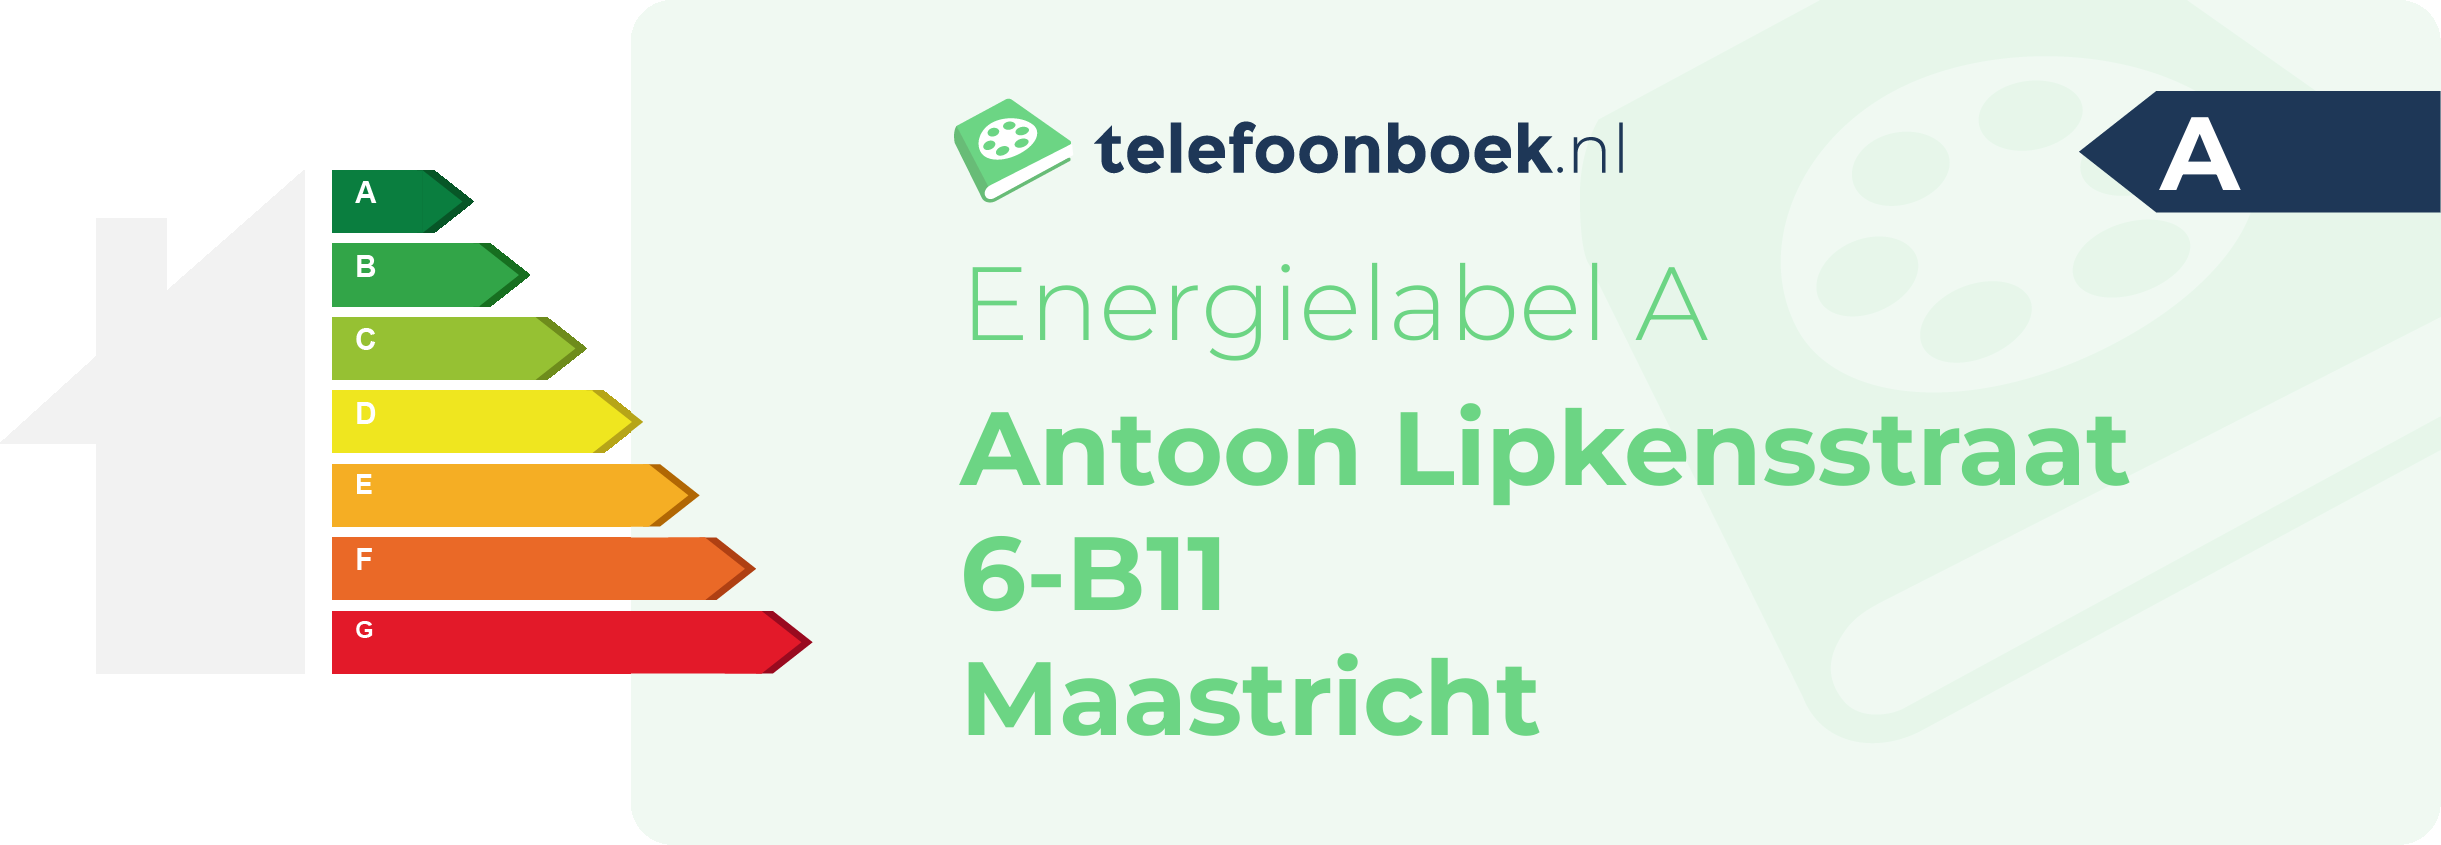 Energielabel Antoon Lipkensstraat 6-B11 Maastricht